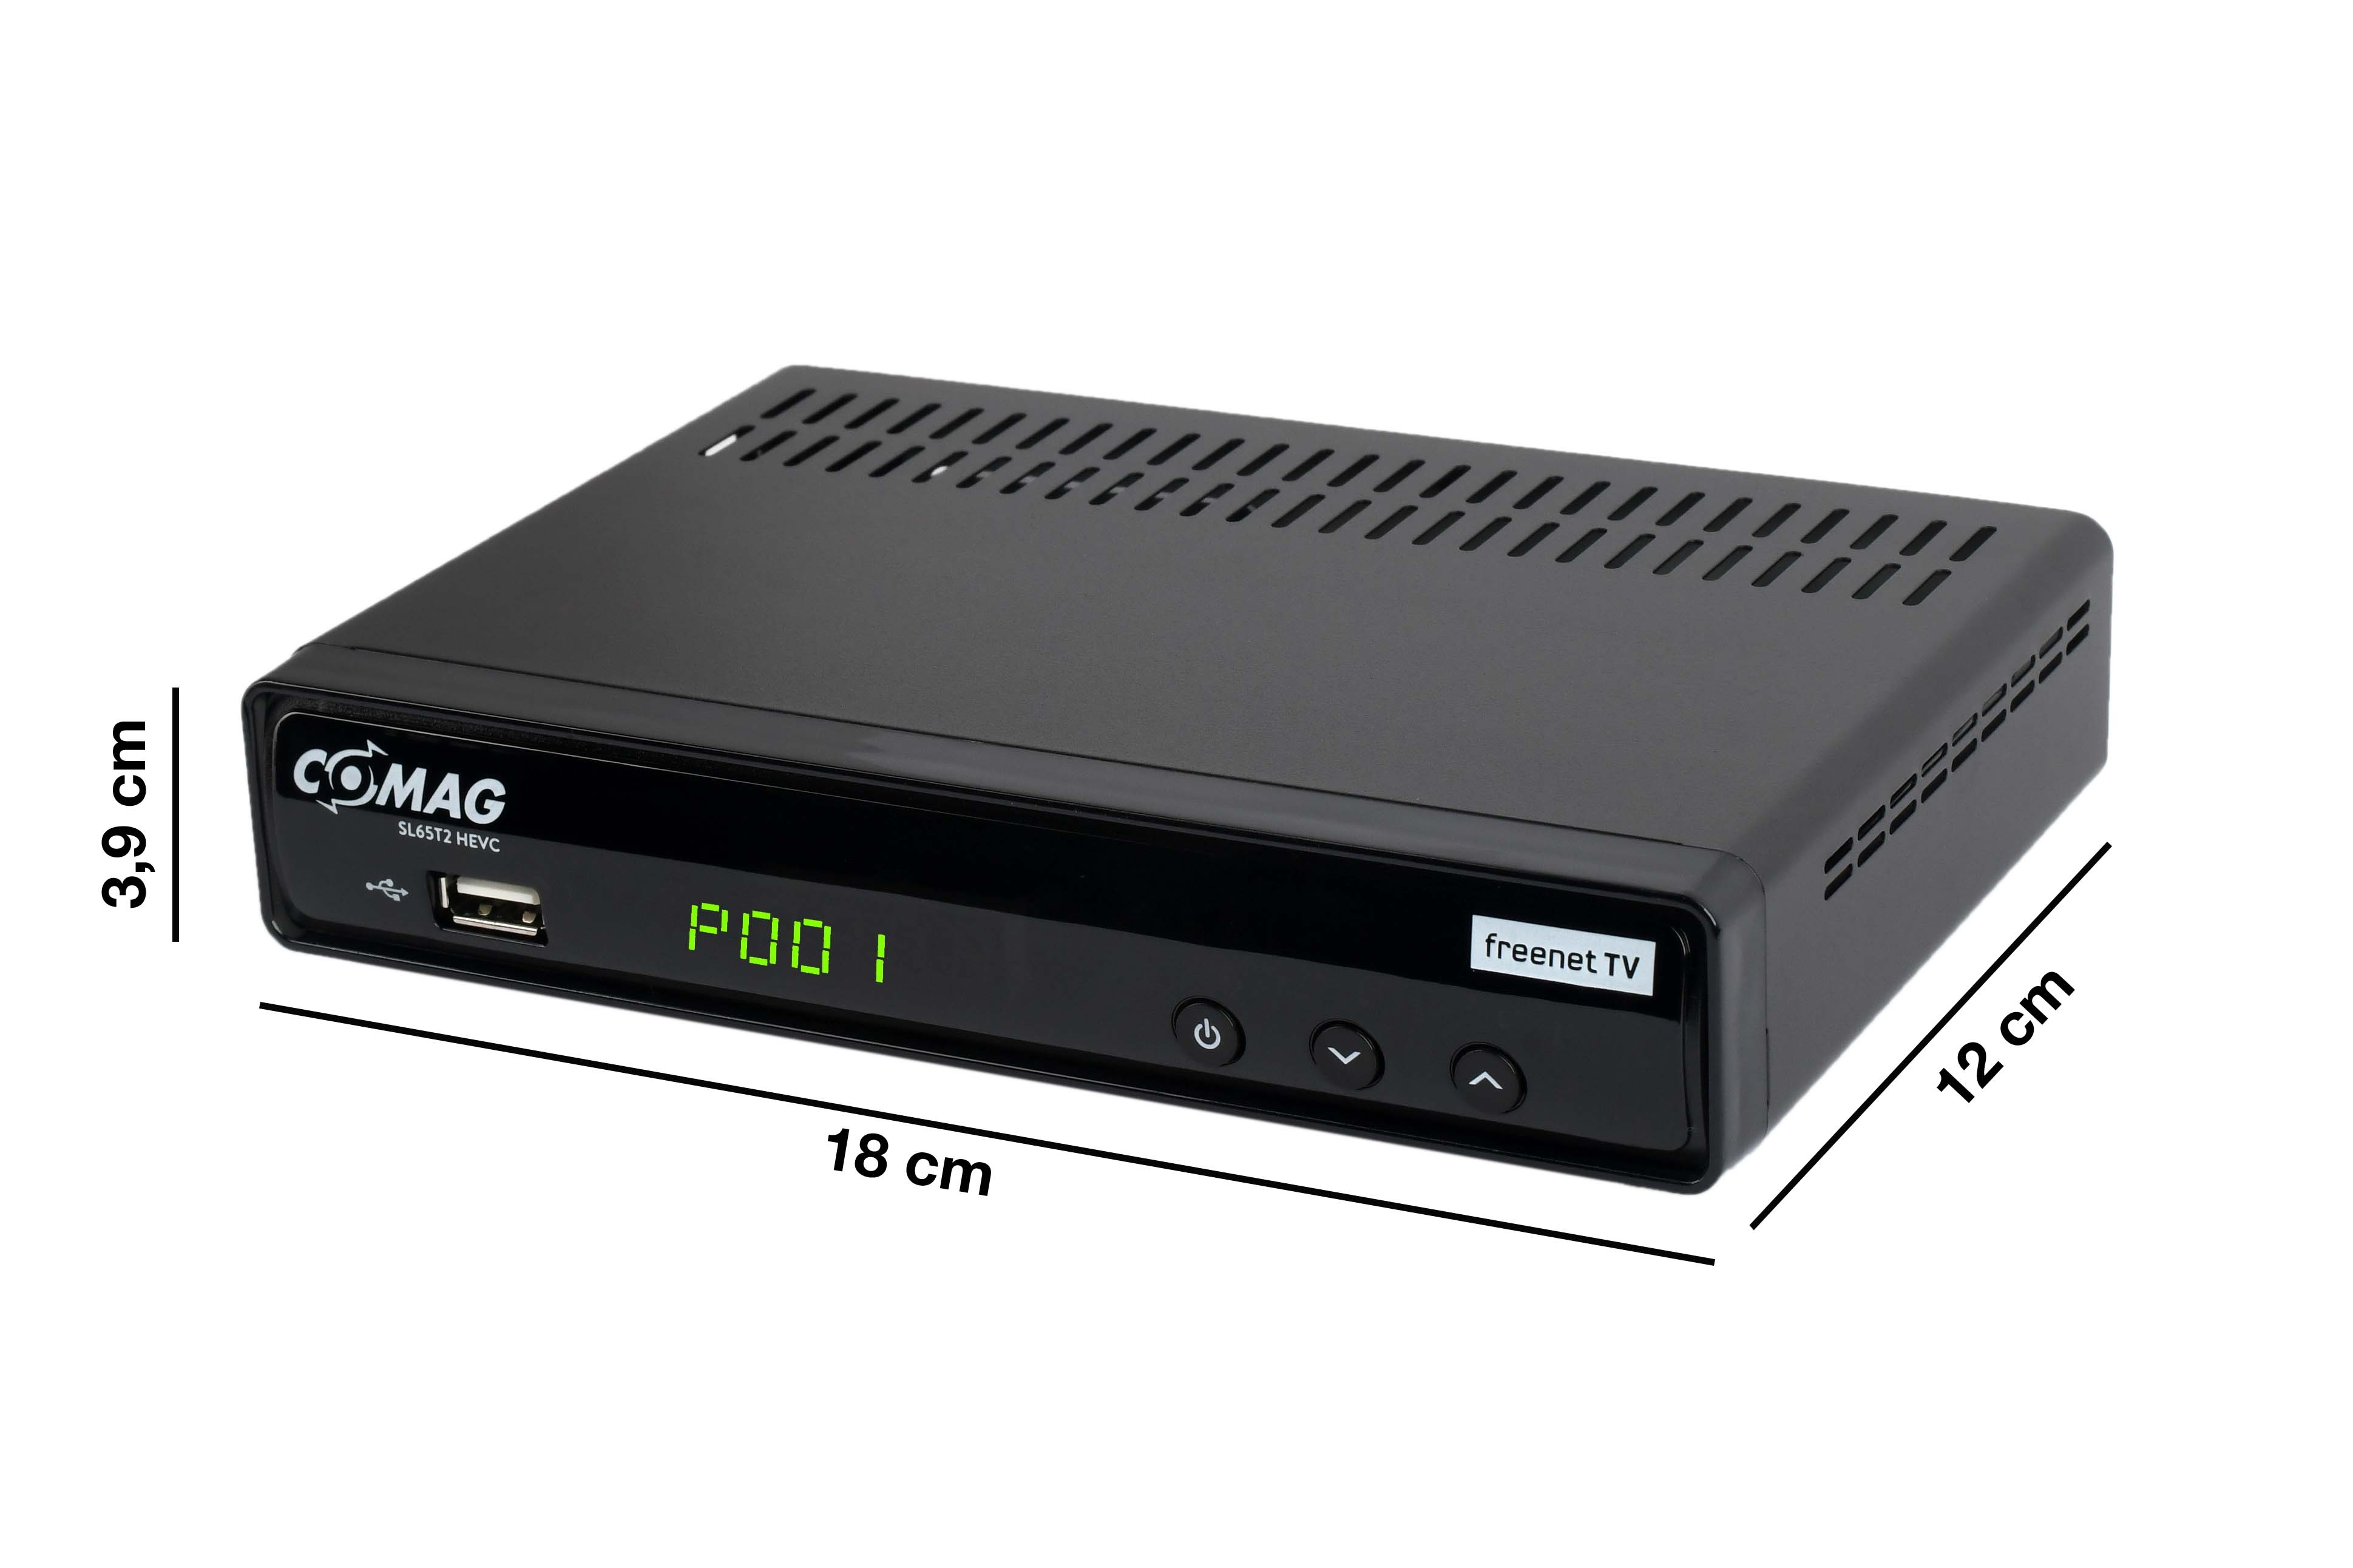 COMAG SL65T2 Home Bundel DVB-T2 (H.264), DVB-T-Receiver DVB-T, PVR-Funktion, (H.265), schwarz) (HDTV, DVB-T2